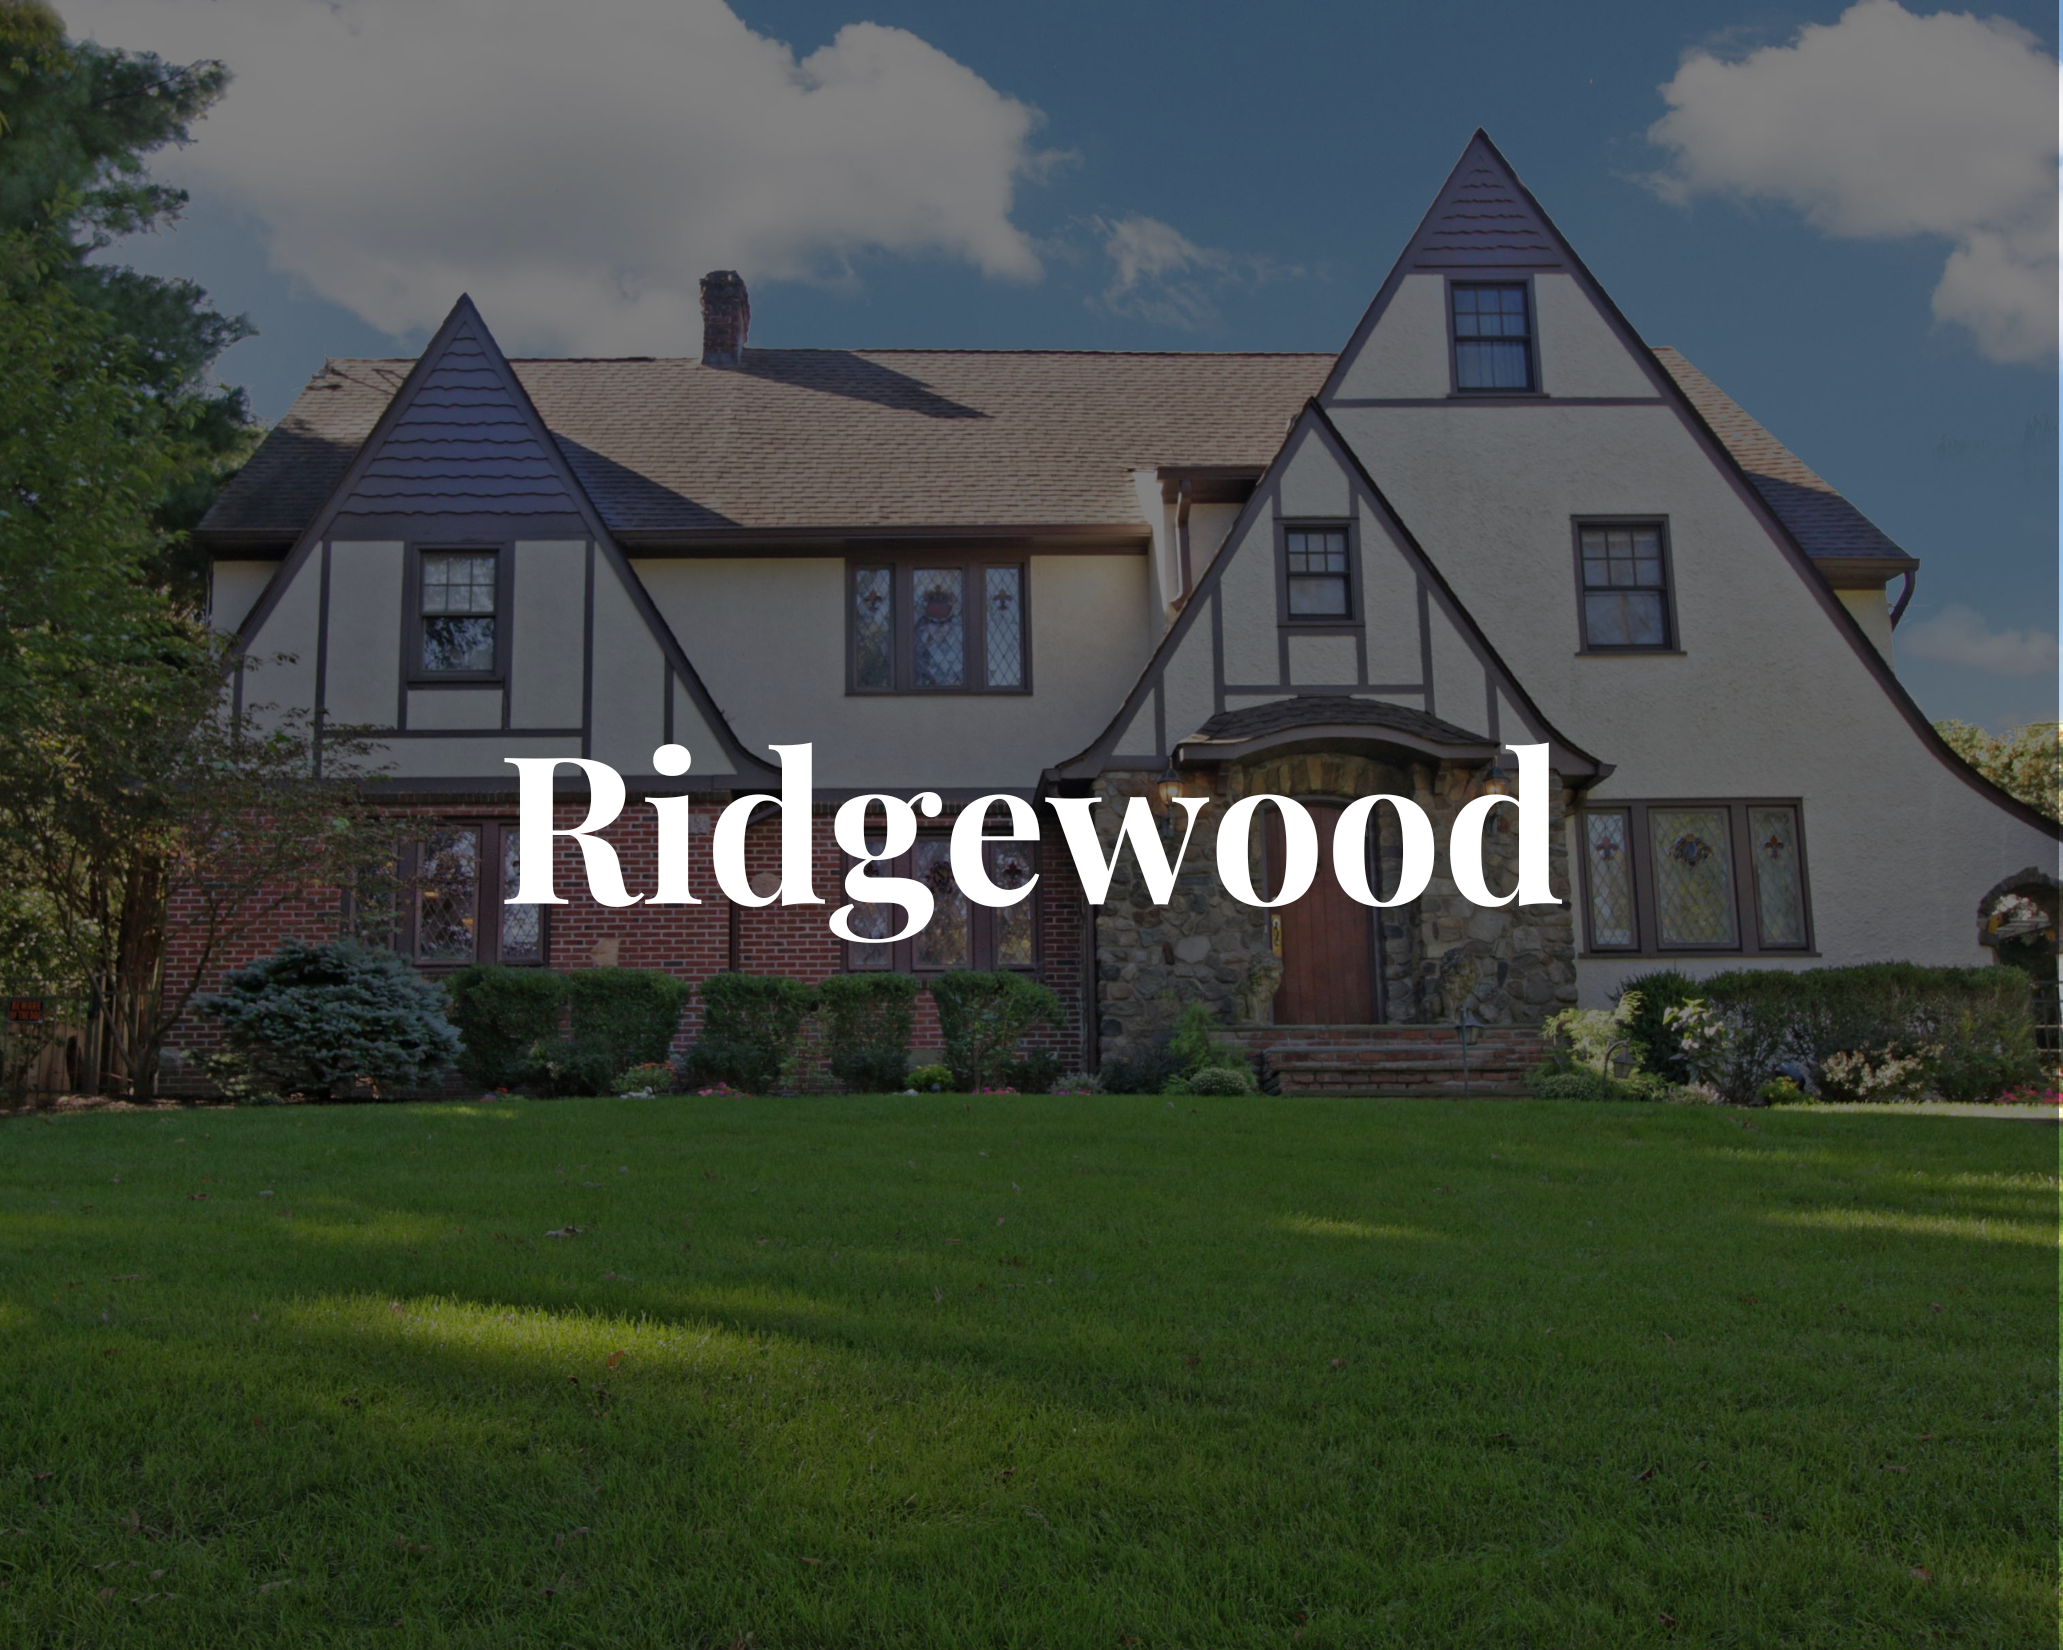 Ridgewood, New Jersey